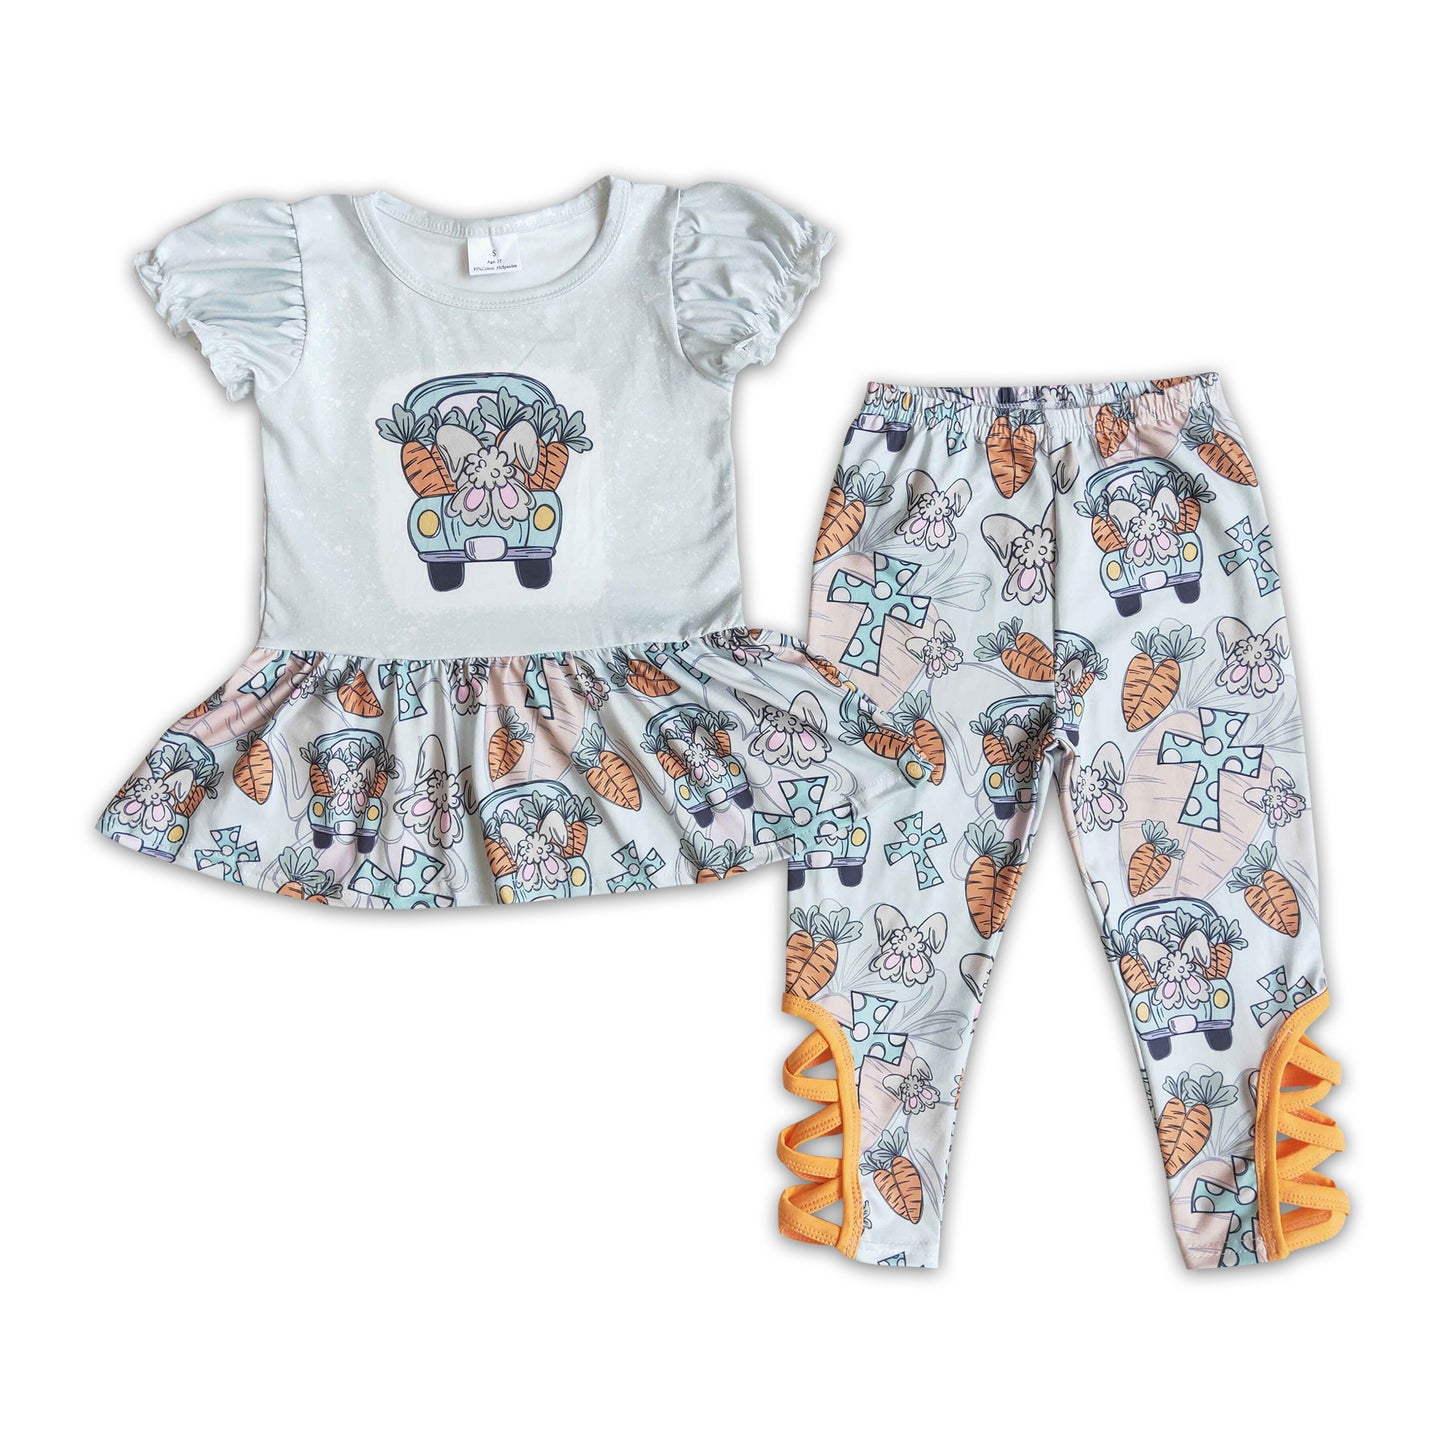 Carrot bunny print shirt criss cross leggings baby girls easter outfits